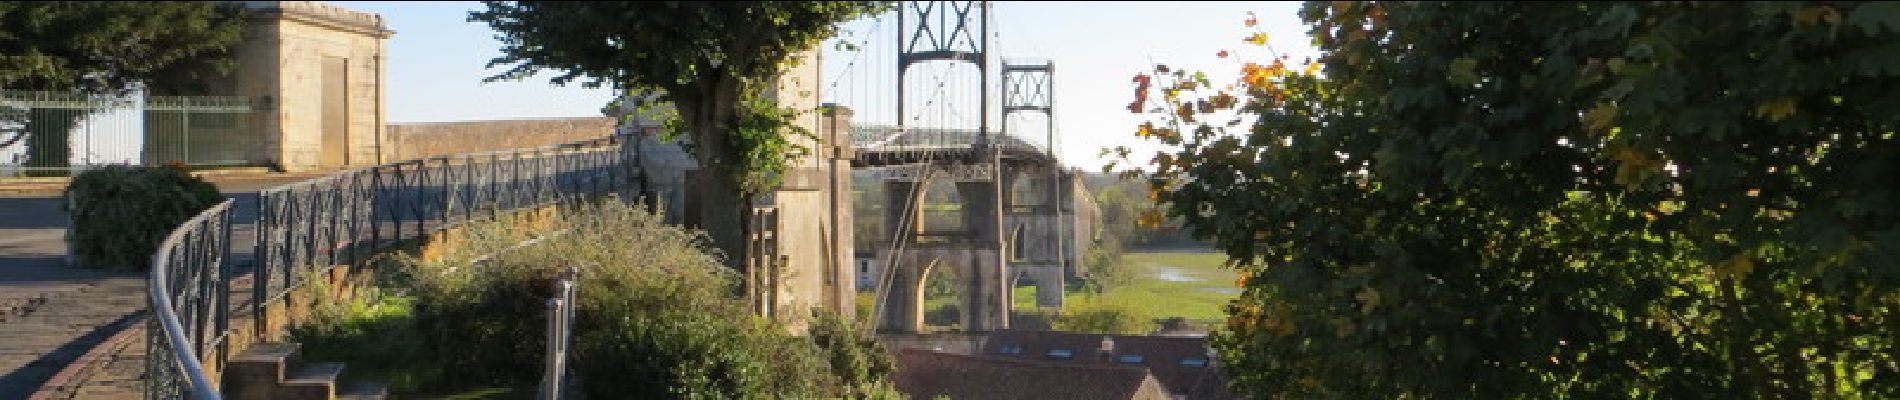 Tour Wandern Rochefort - Les ponts rochefortais - Rochefort - Photo